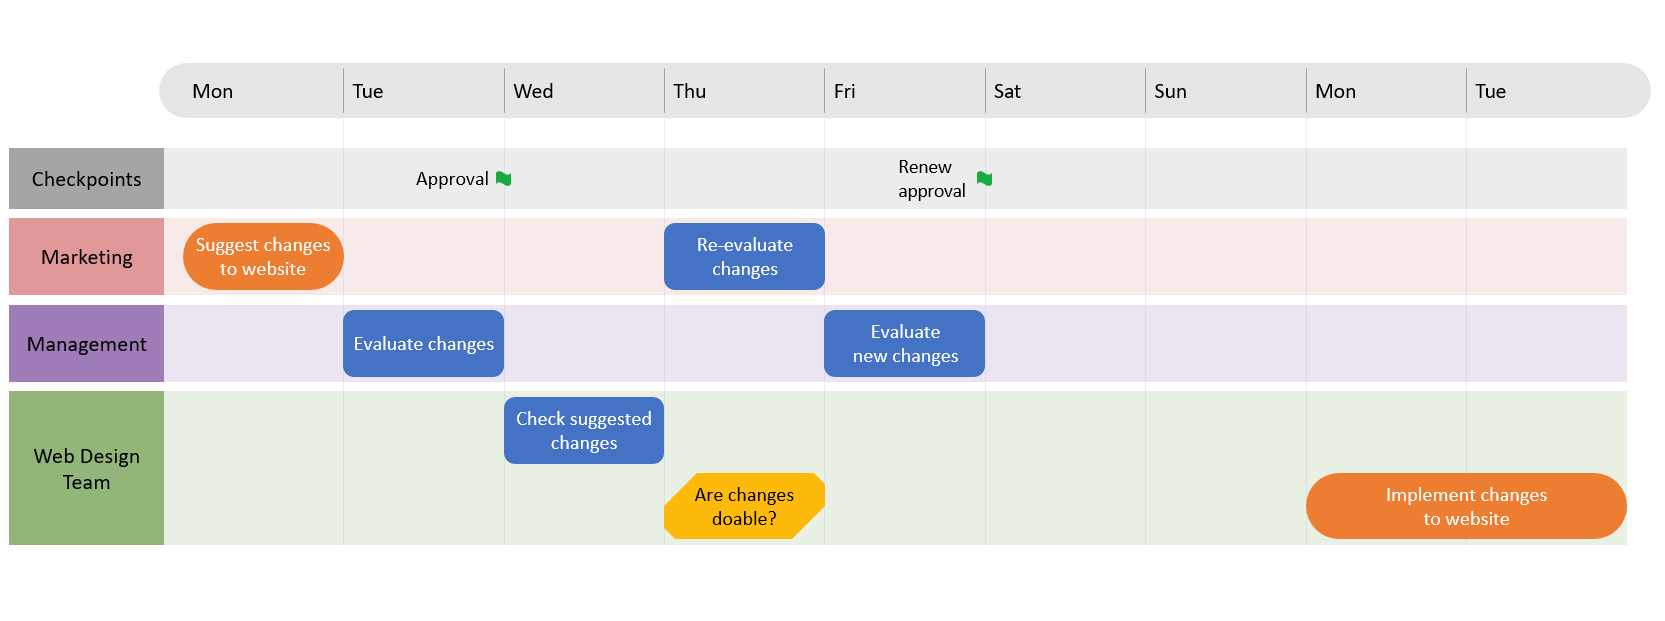 Basic automatic PowerPoint swimlane diagram – no connectors